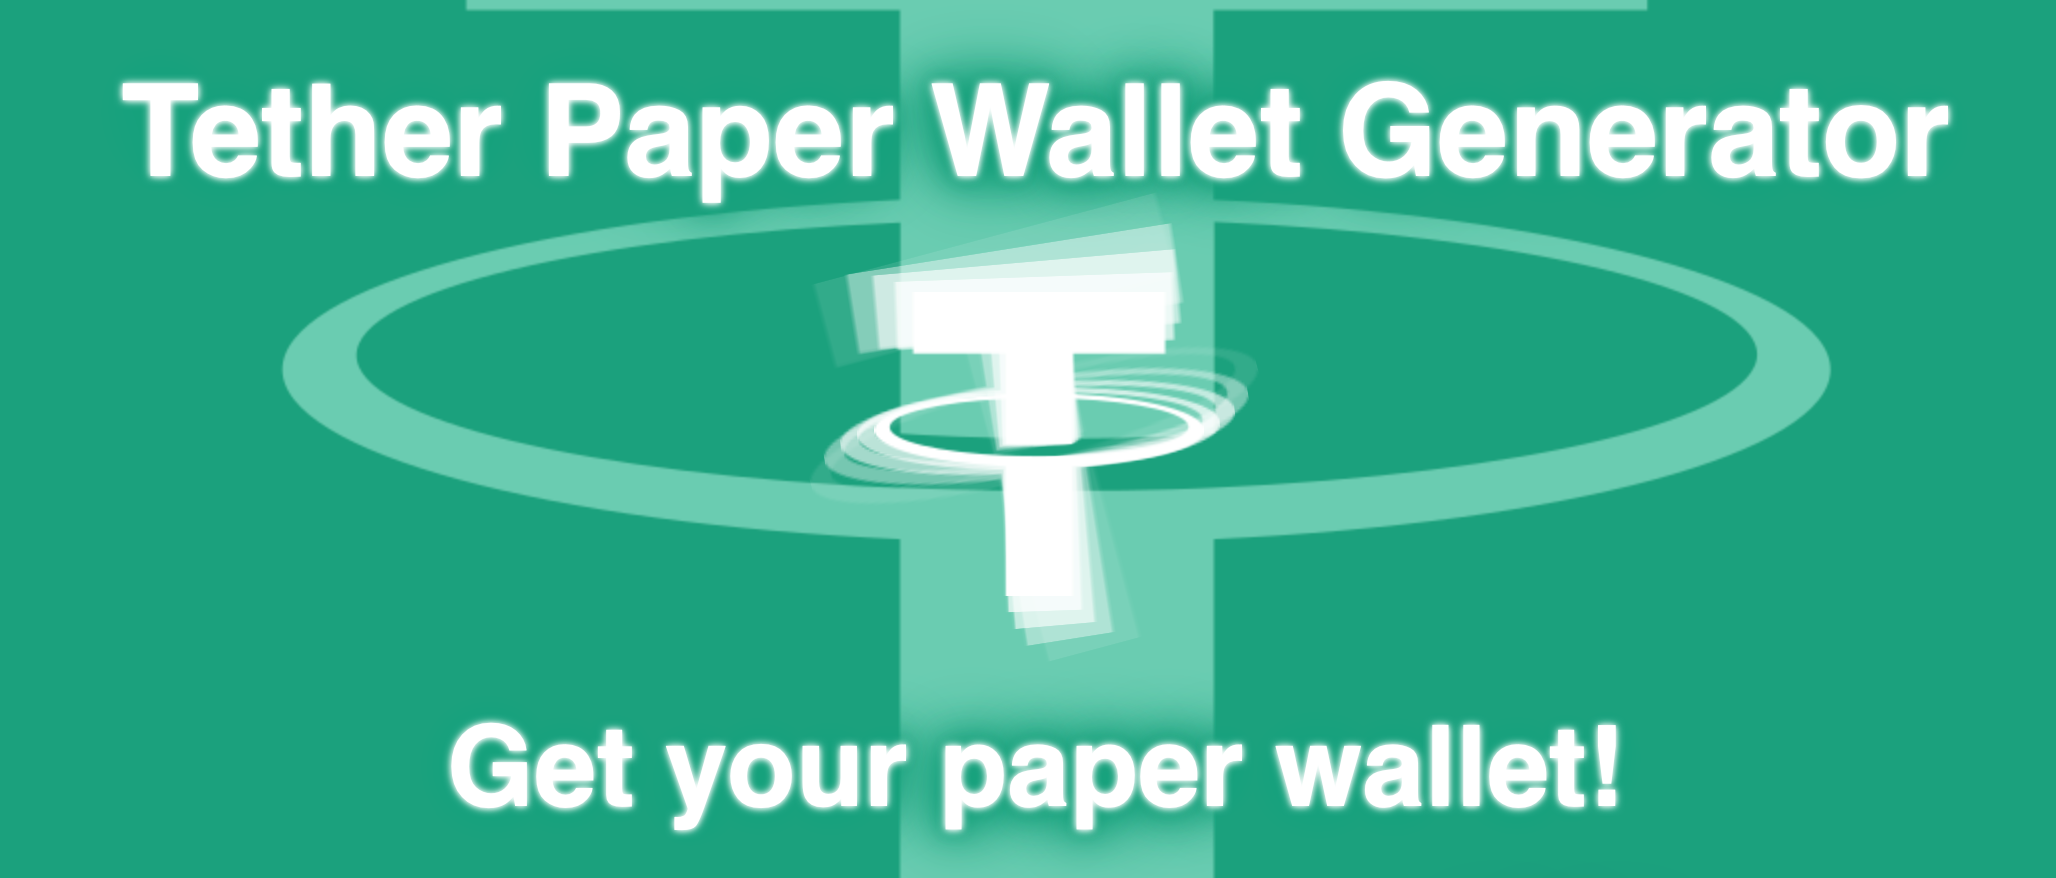 tether paper wallet